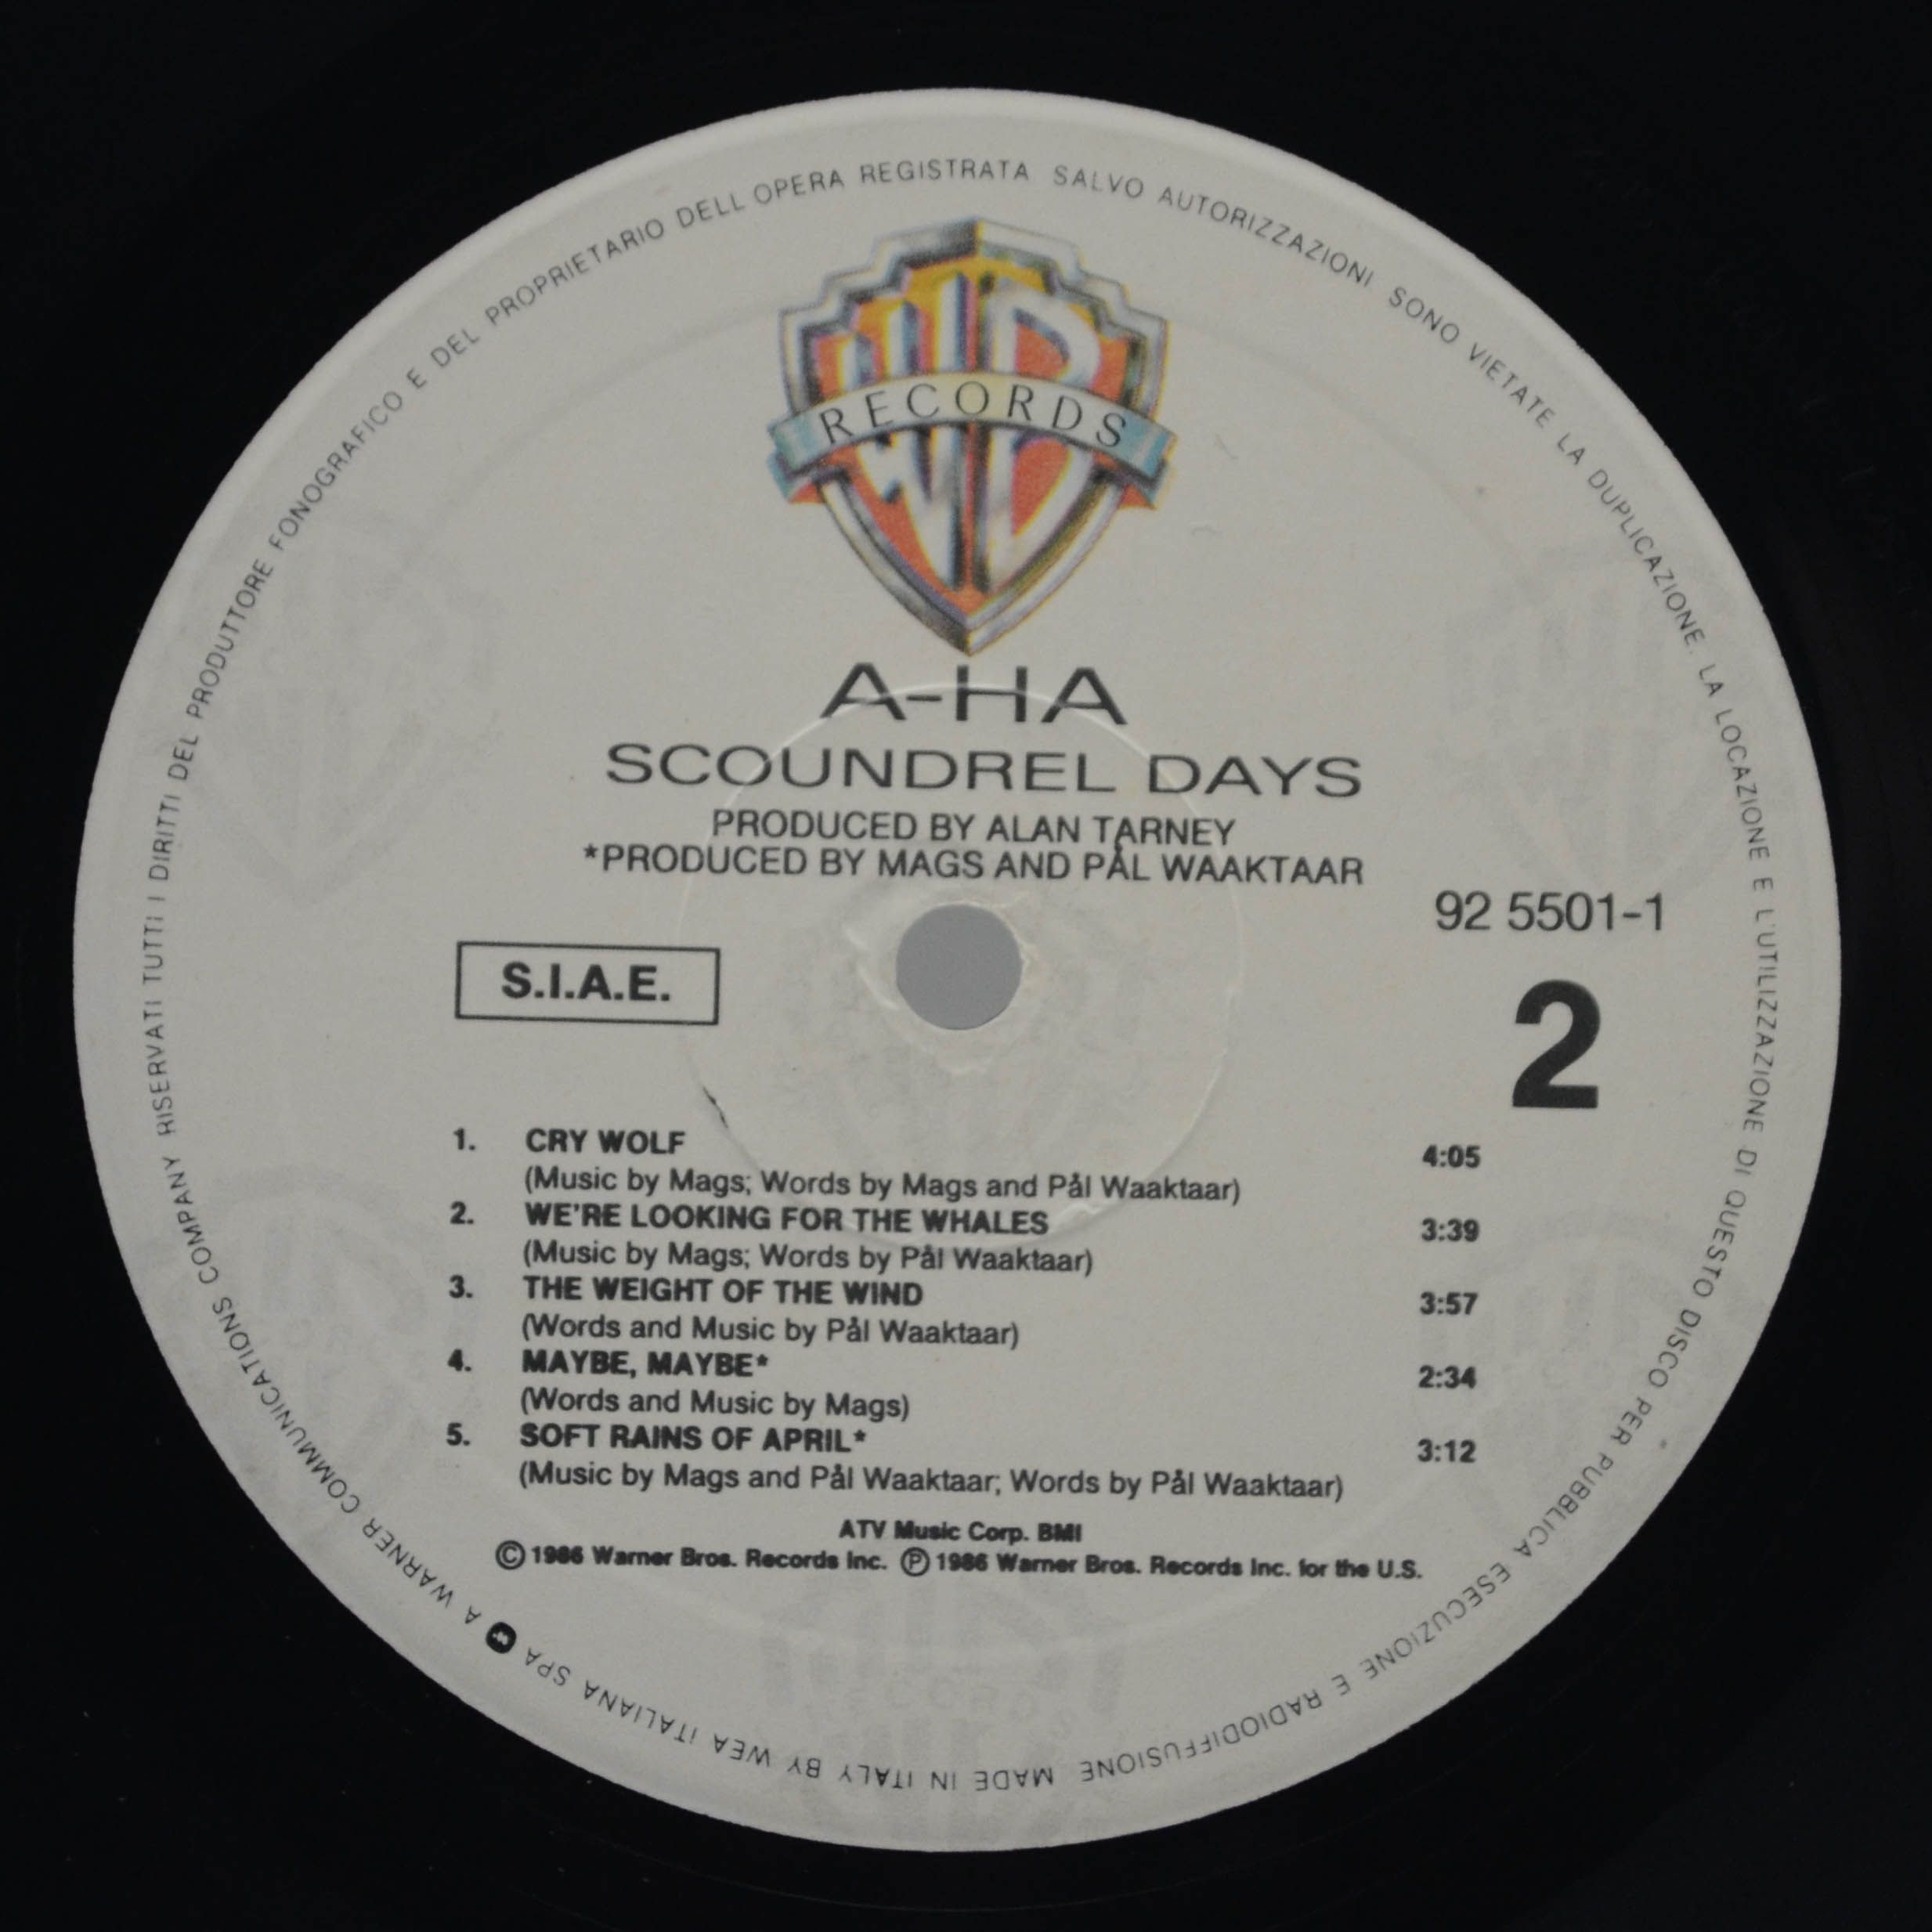 a-ha — Scoundrel Days, 1986